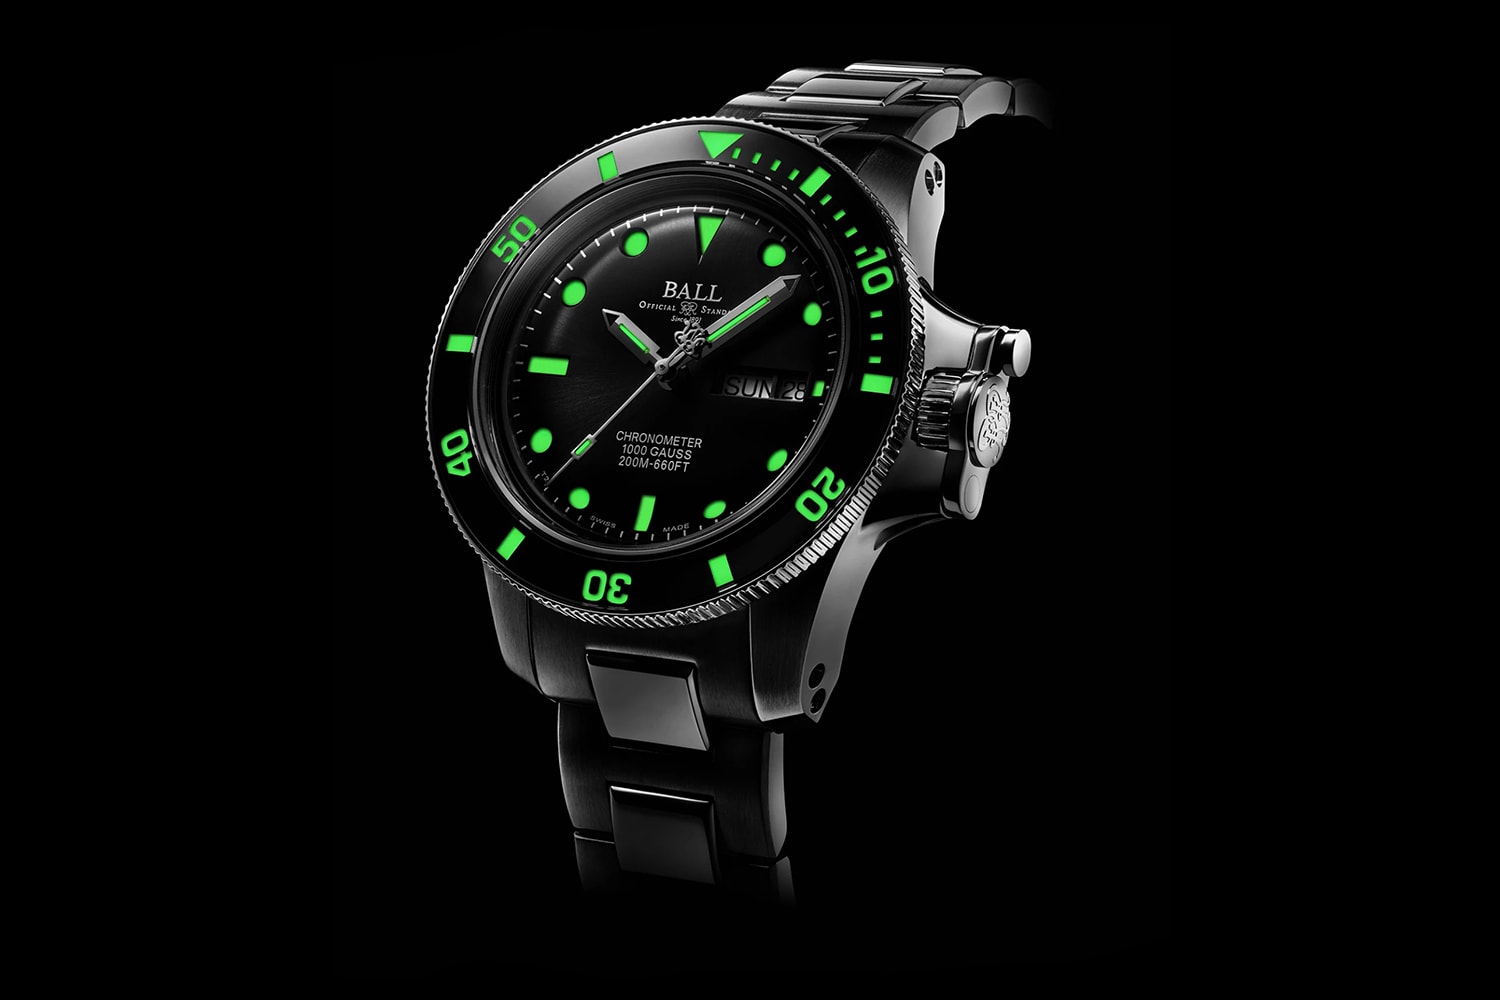 Ball Watch Engineer Hydrocarbon Original Watch lume tritium gas dive watch swiss made automatic wristwatch 